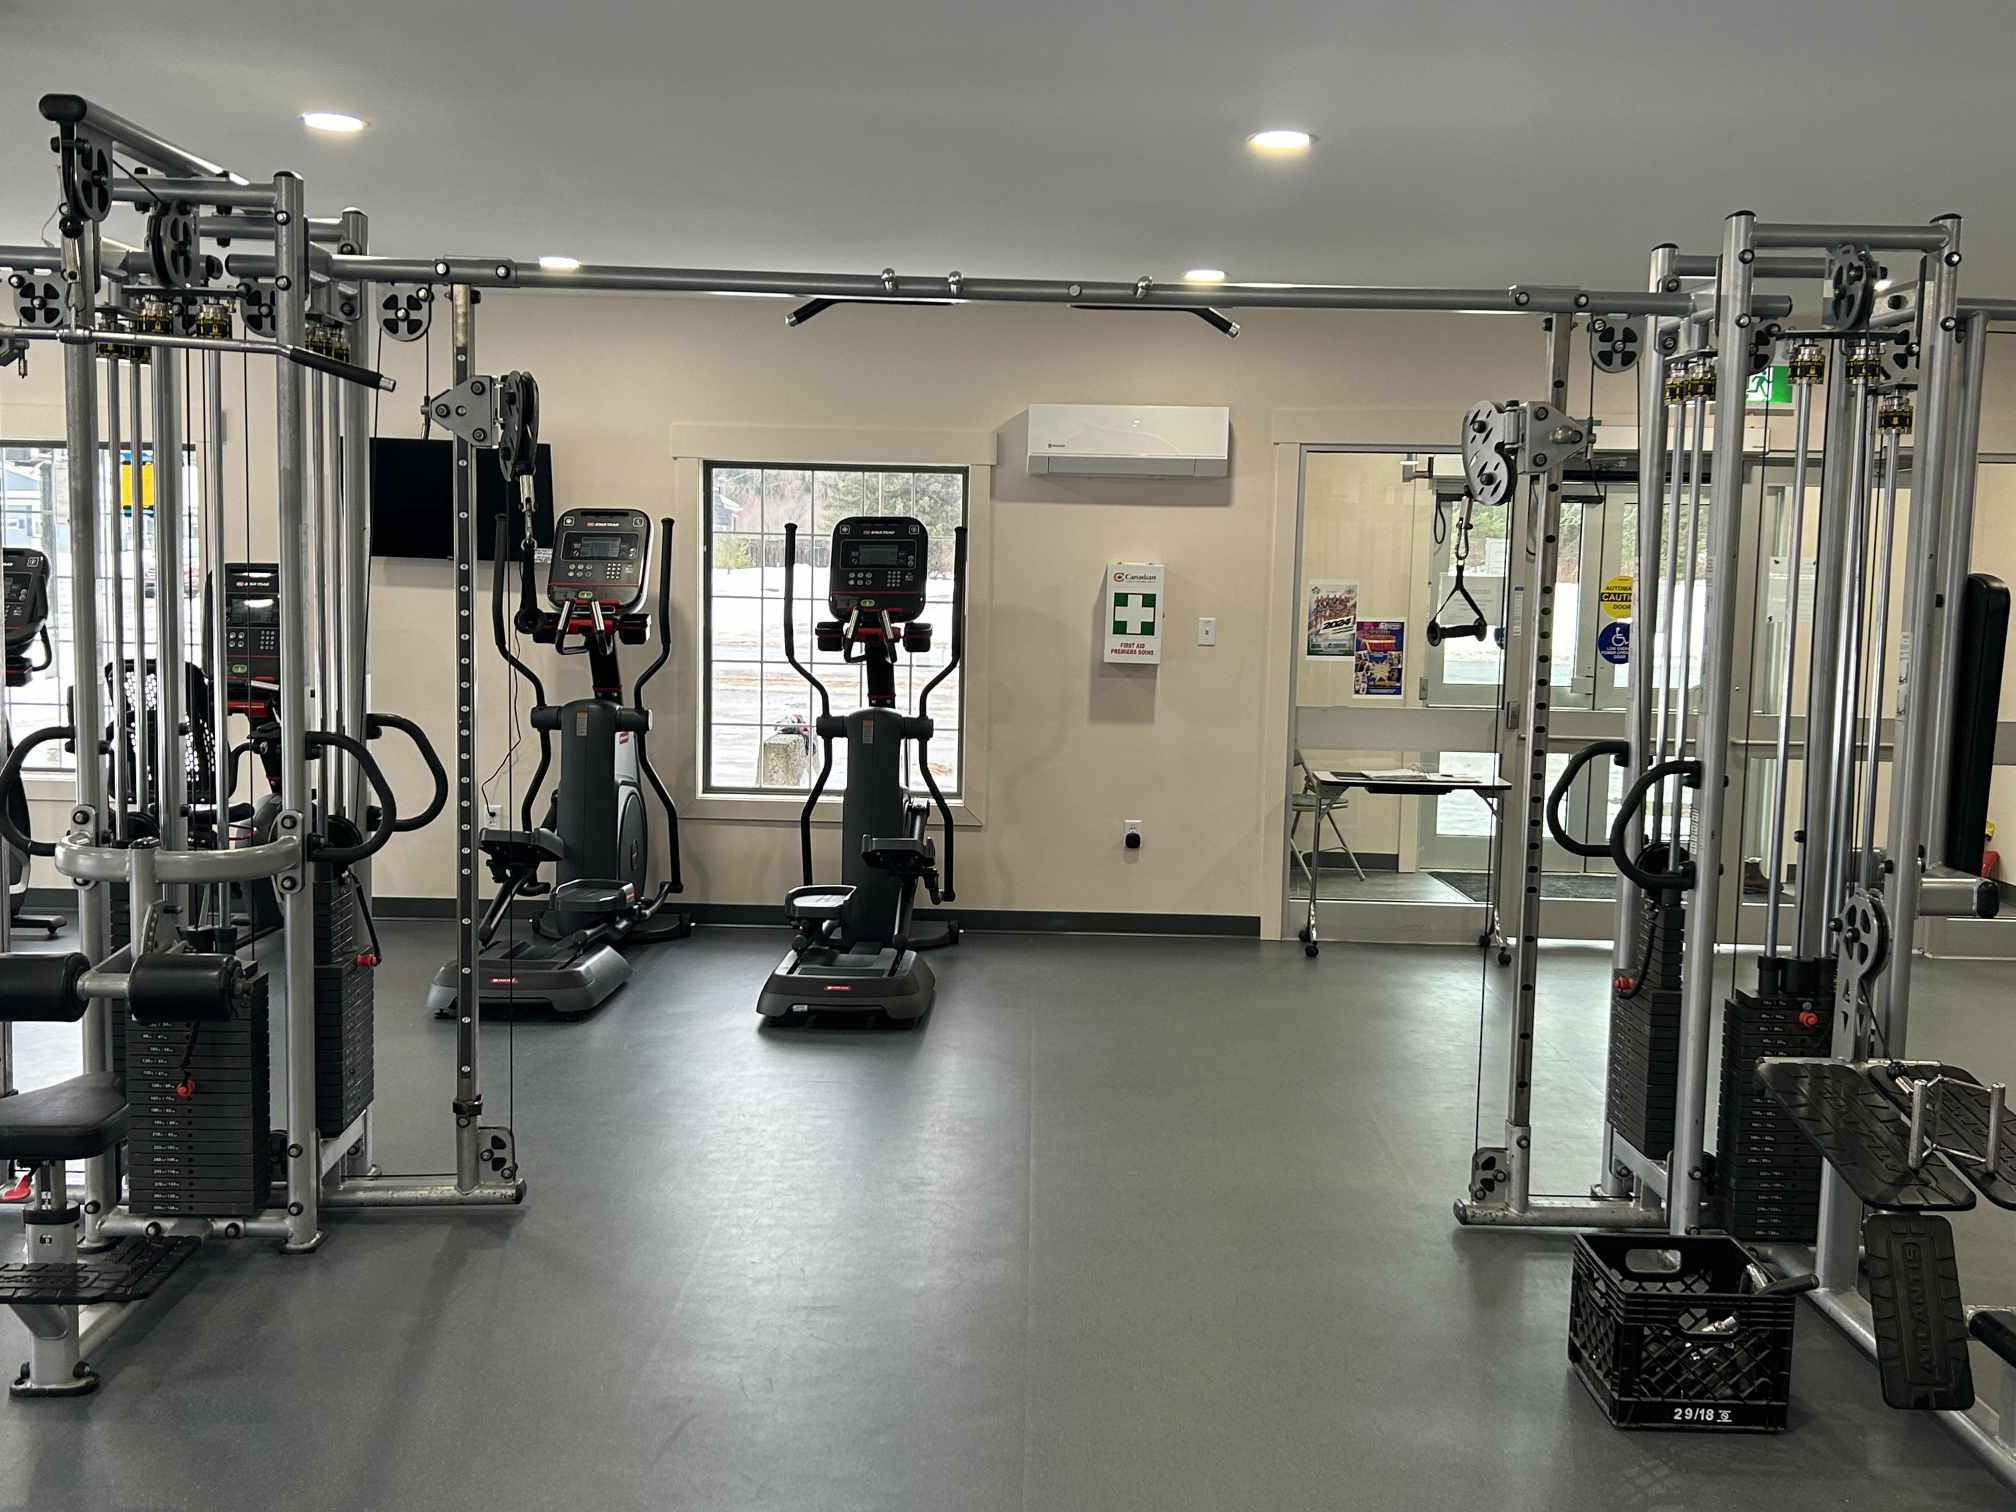 Doaktown Fitness Centre 2